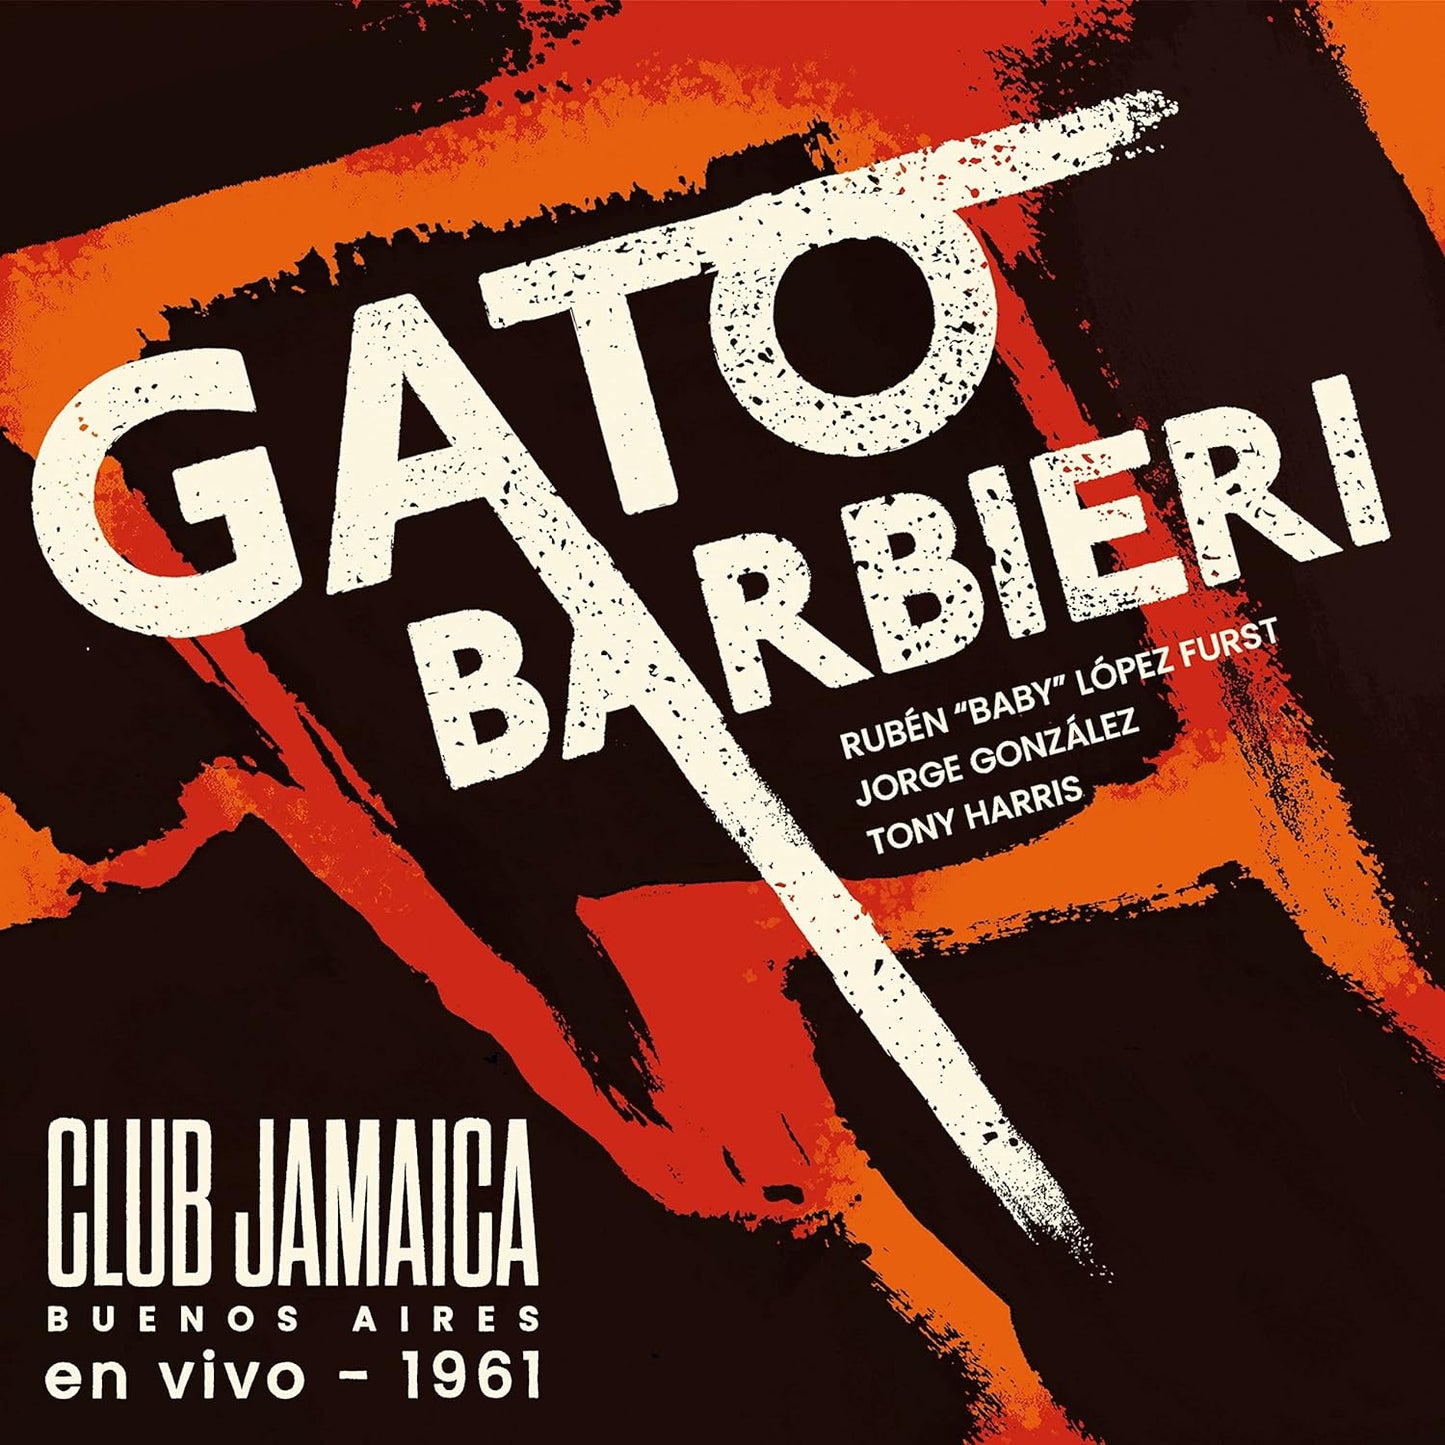 Gato Barbieri - Club Jamaica (Buenos Aires) (Vinile 180gr.)